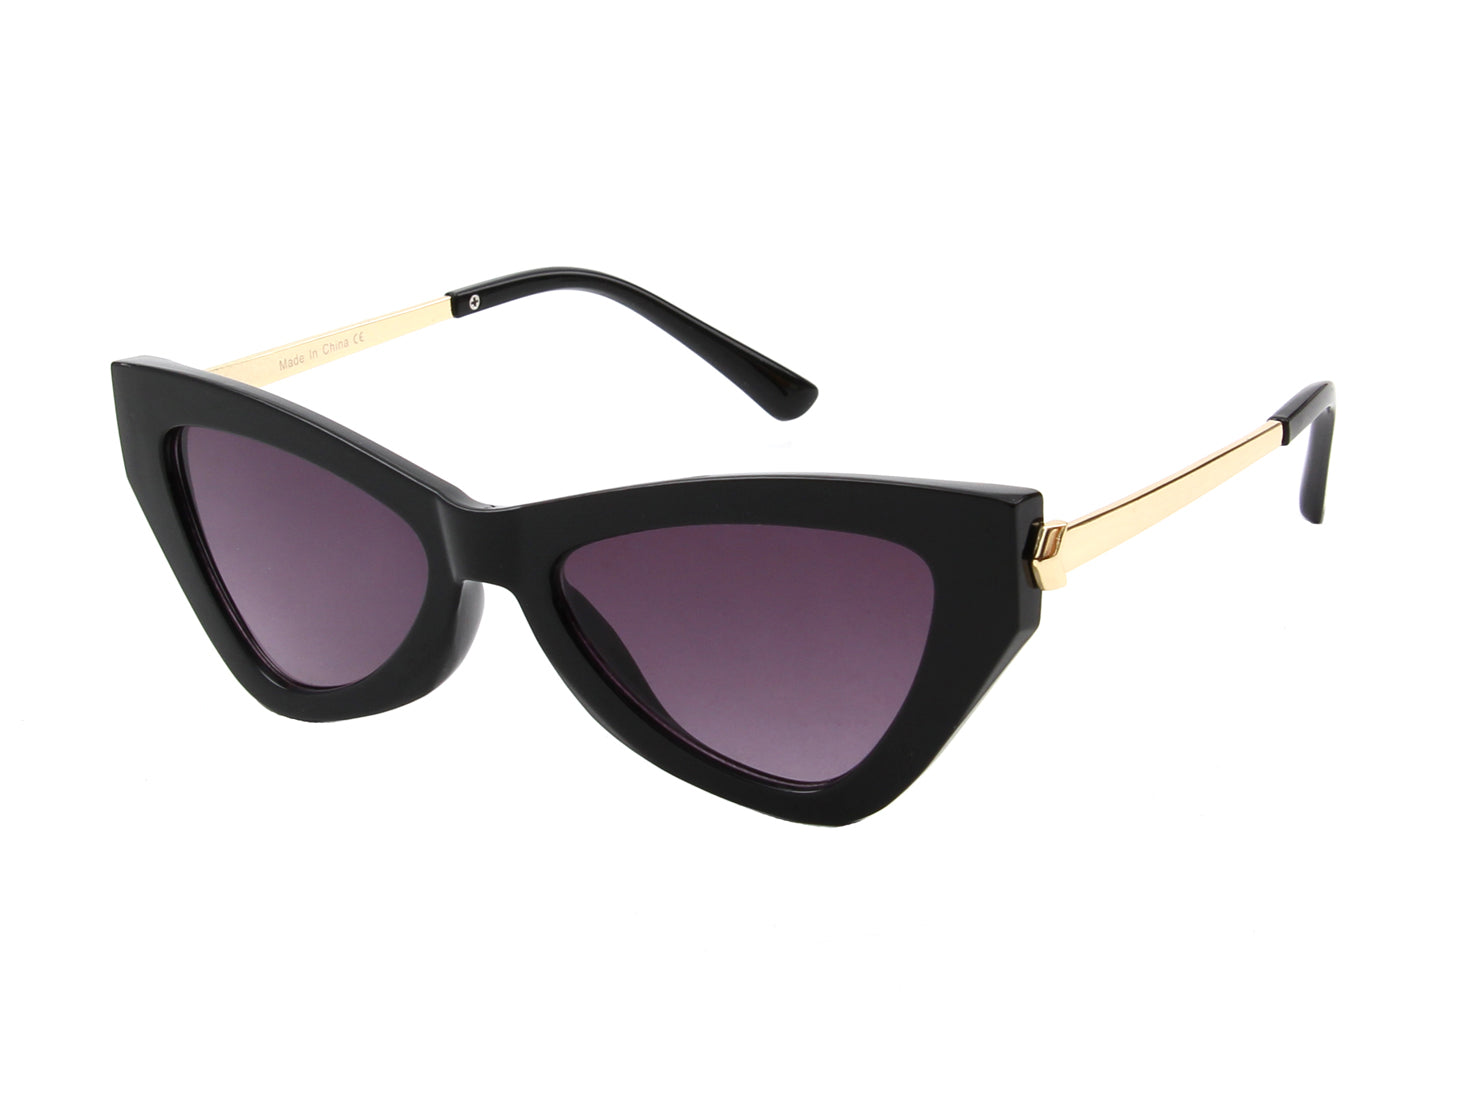 S2099 - Women High Pointed Cat Eye Fashion SUNGLASSES Black/Gradient Purple